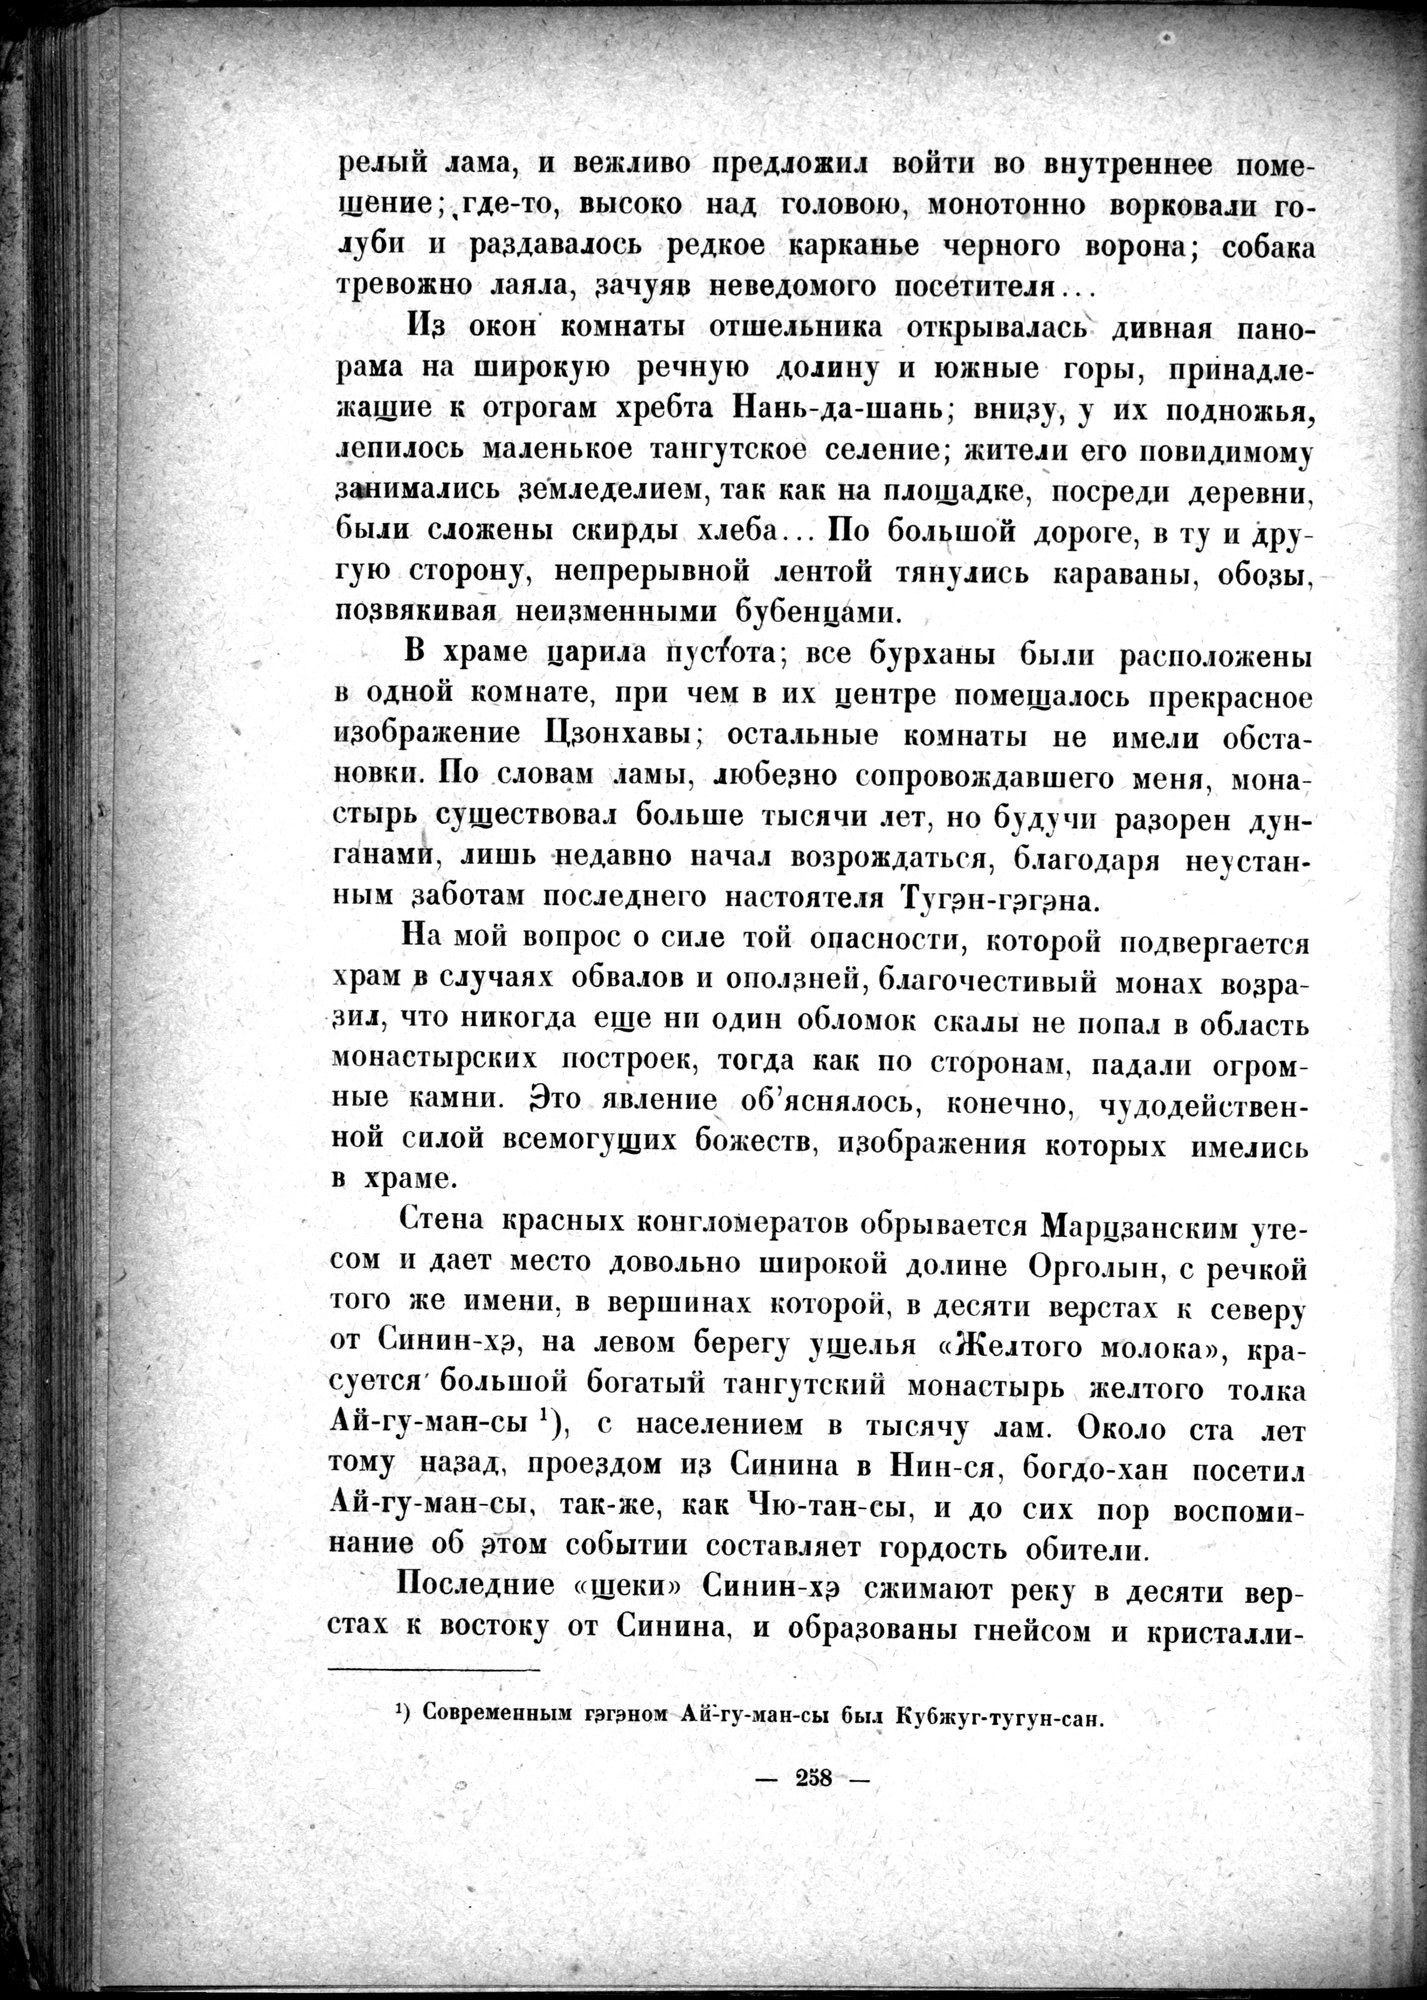 Mongoliya i Amdo i mertby gorod Khara-Khoto : vol.1 / Page 304 (Grayscale High Resolution Image)